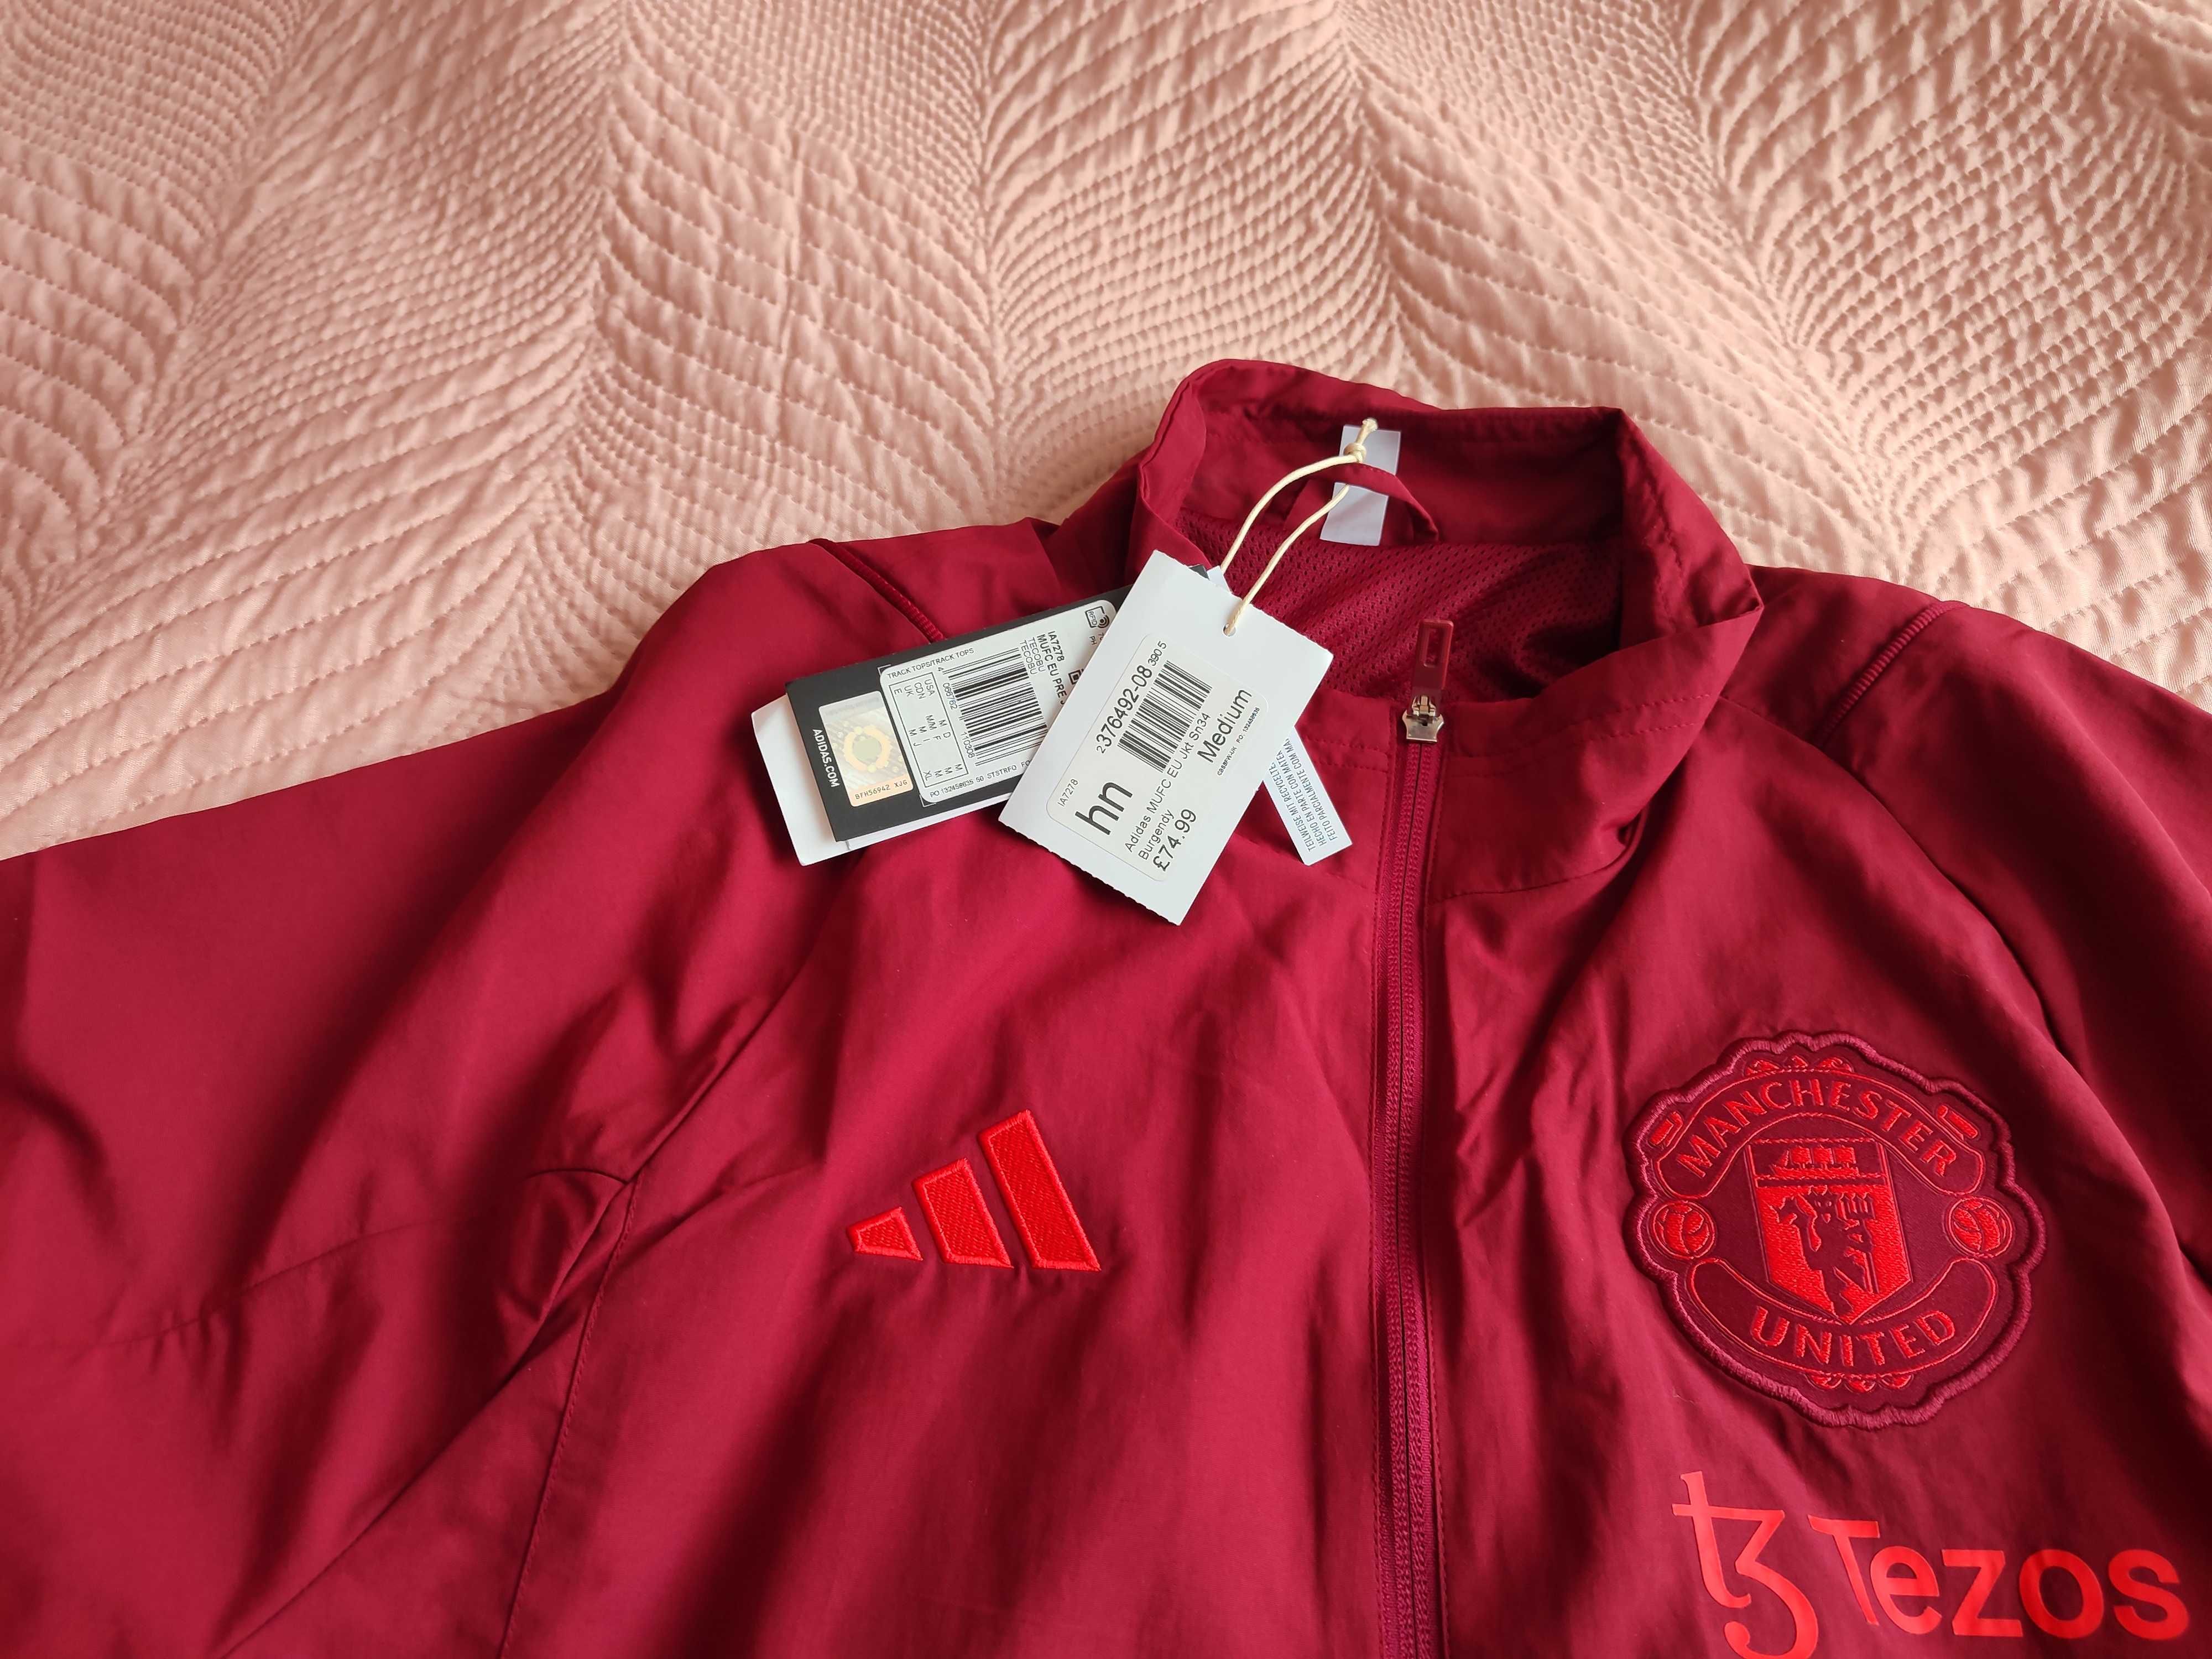 Adidas, Manchester United